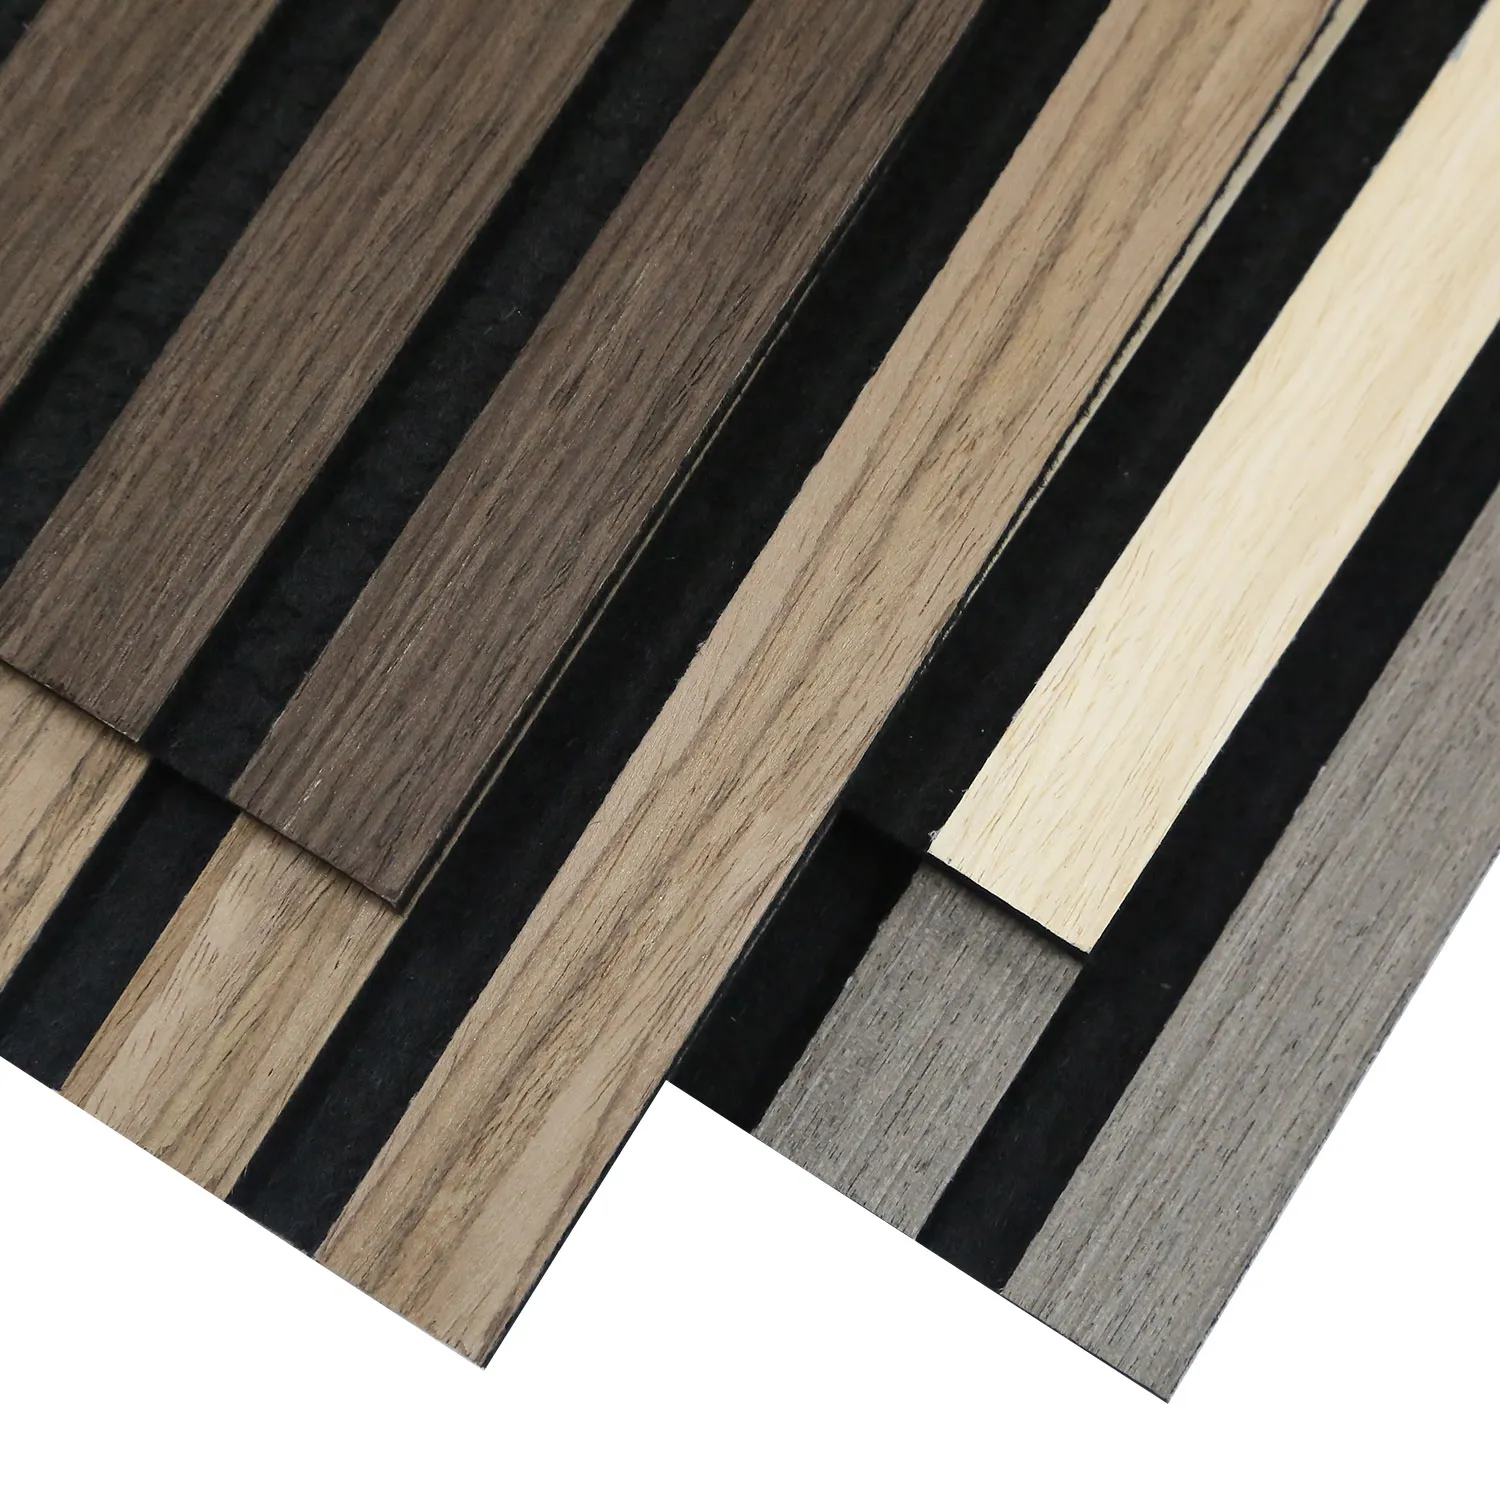  Grooved Wood Slat Wall Panel